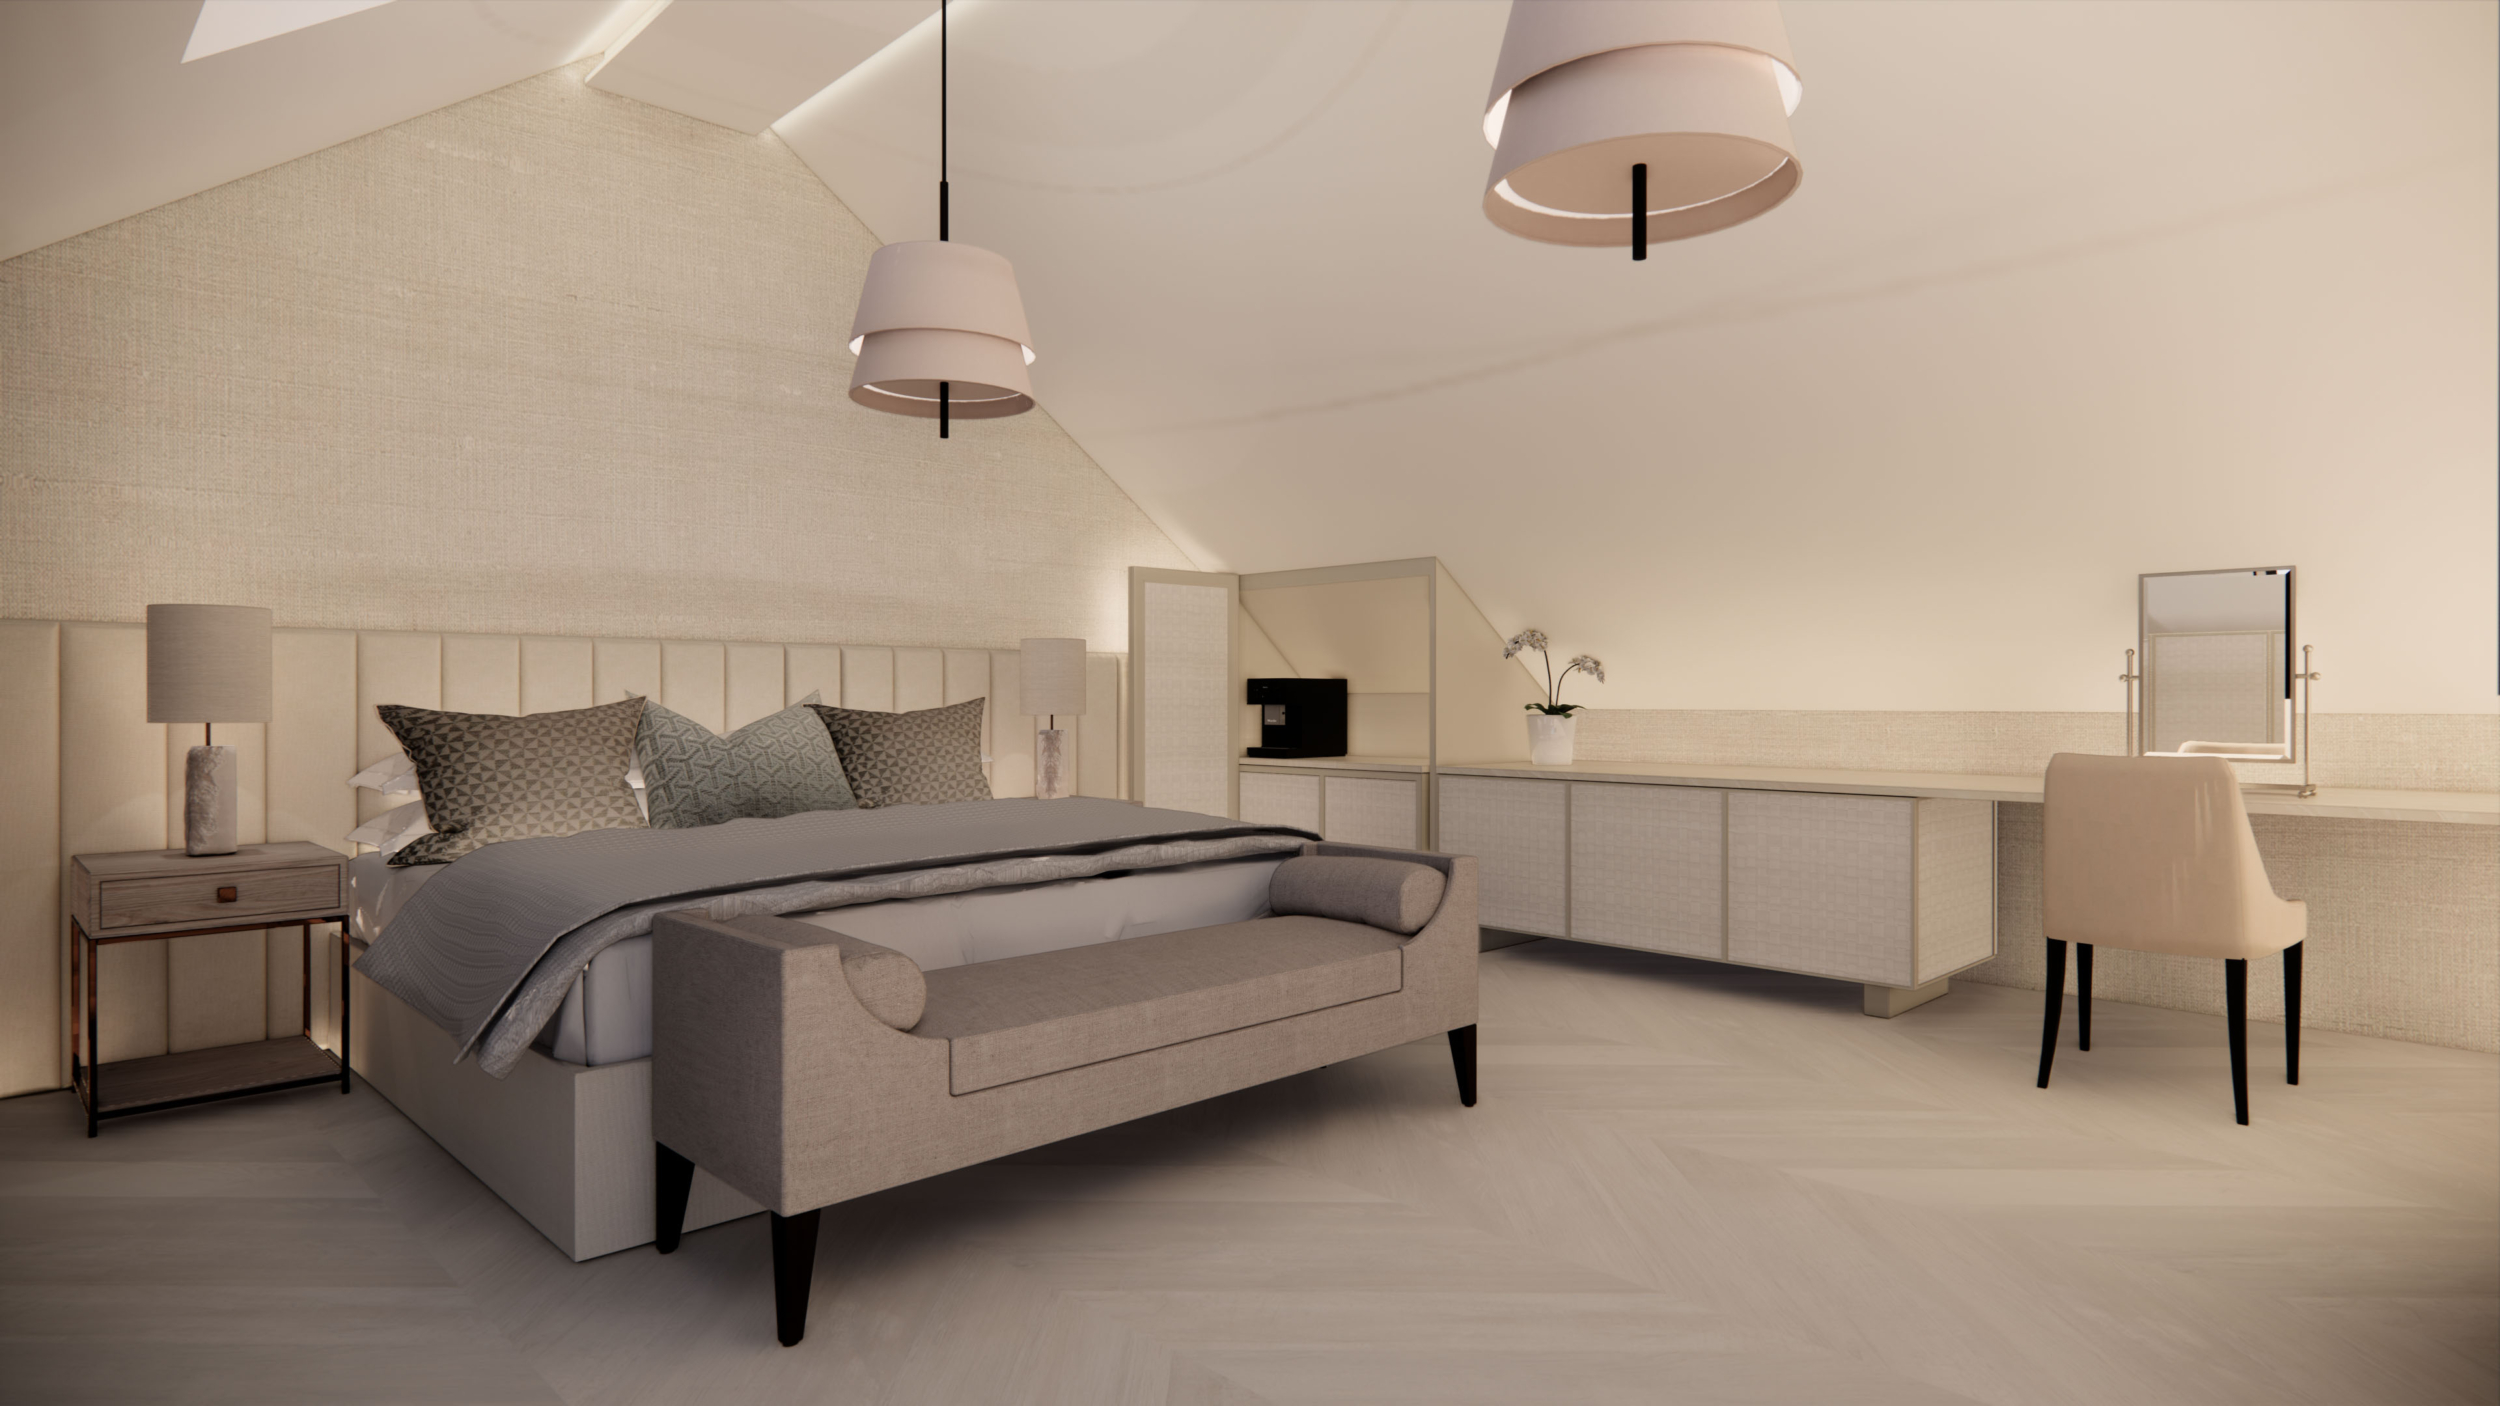 Villa Sapphire, Bedroom CGI, Linear CGI Studio